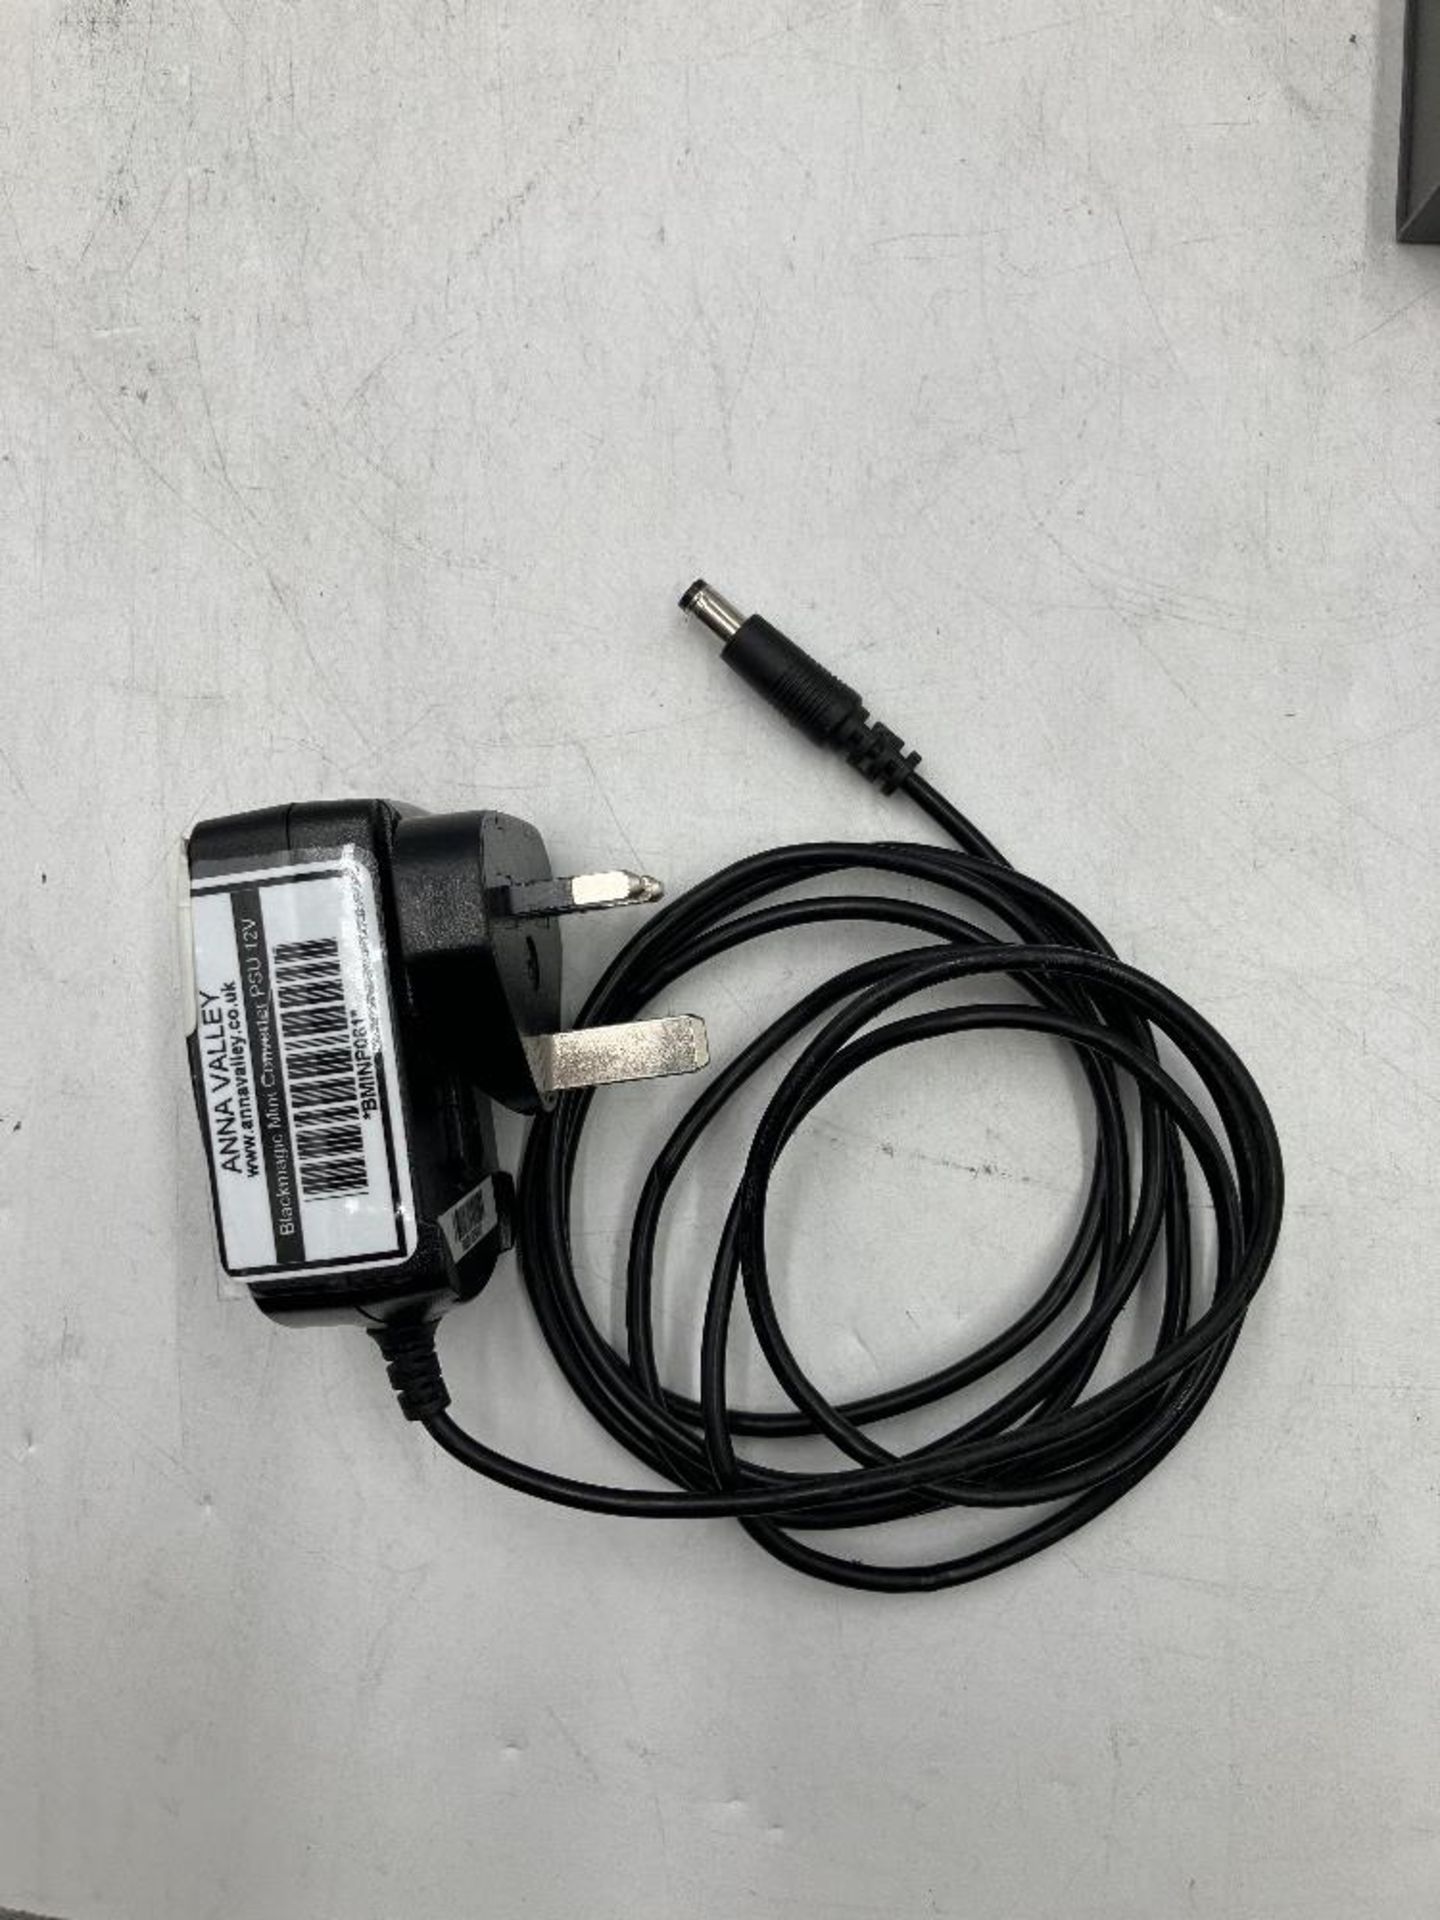 Blackmagic Mini Optical Fibre to SDI Bidirectional Converter With Power Cable & Plastic Carry Case - Image 5 of 5